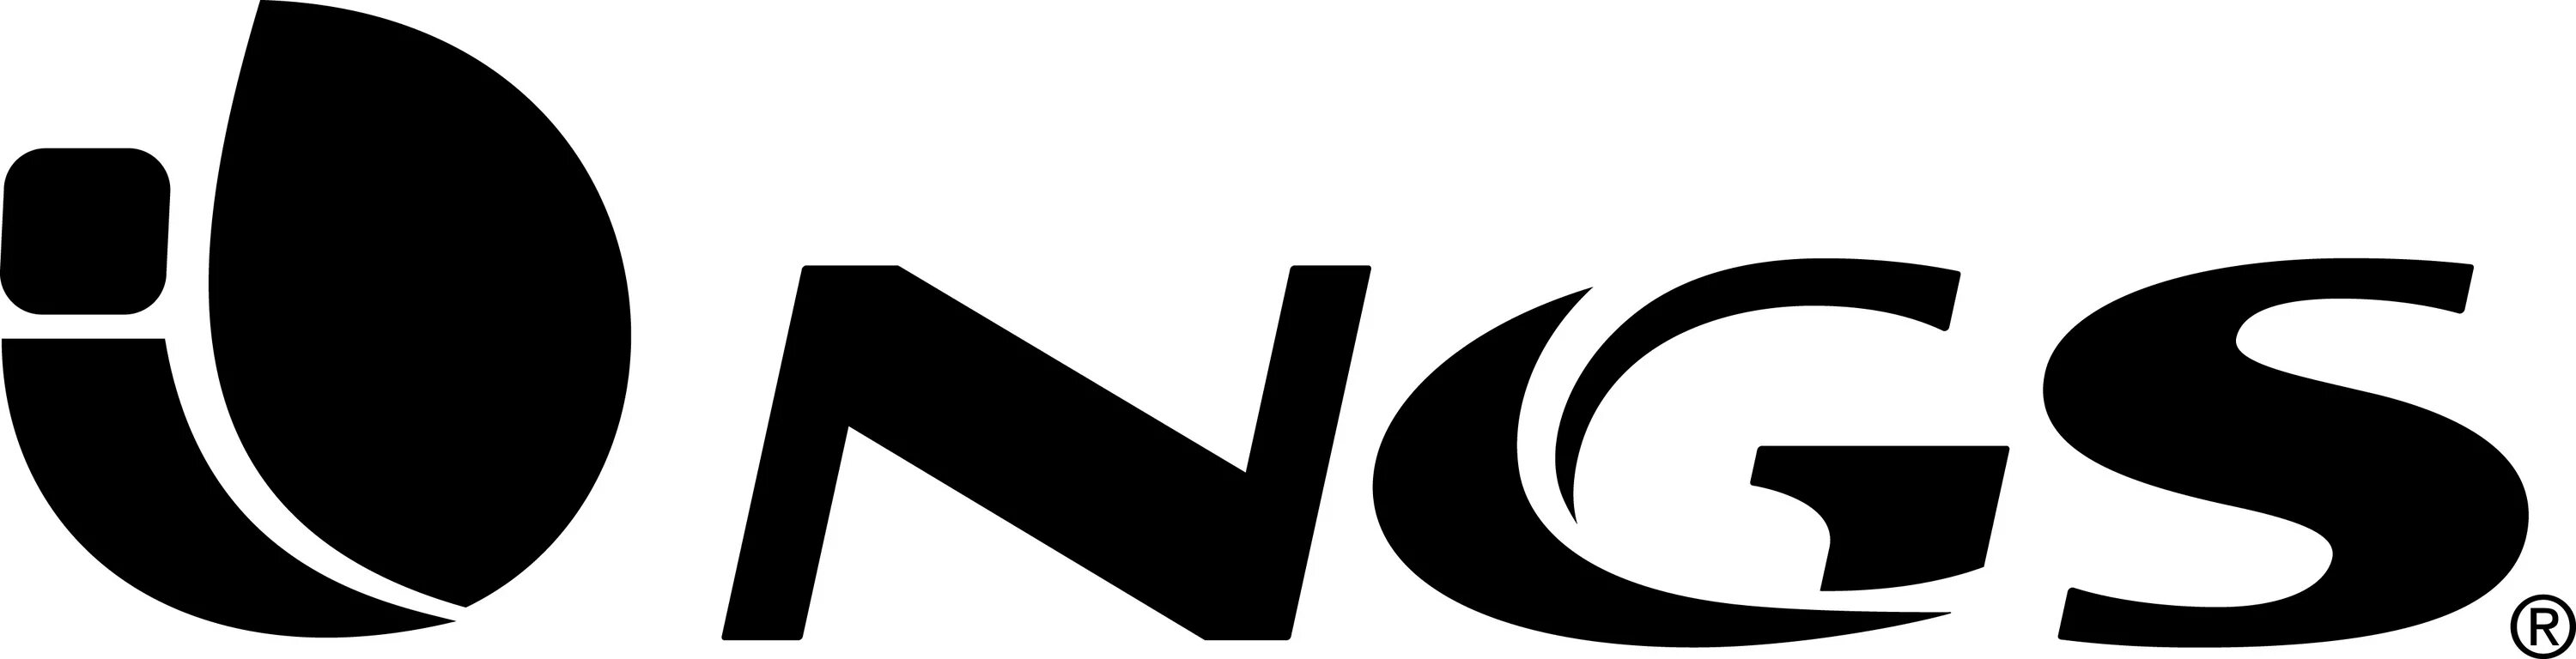 Ngs. NGS логотип. НГС Новосибирск лого. НГС Нефтегазстрой логотип. NGS neogroupstayl logo.